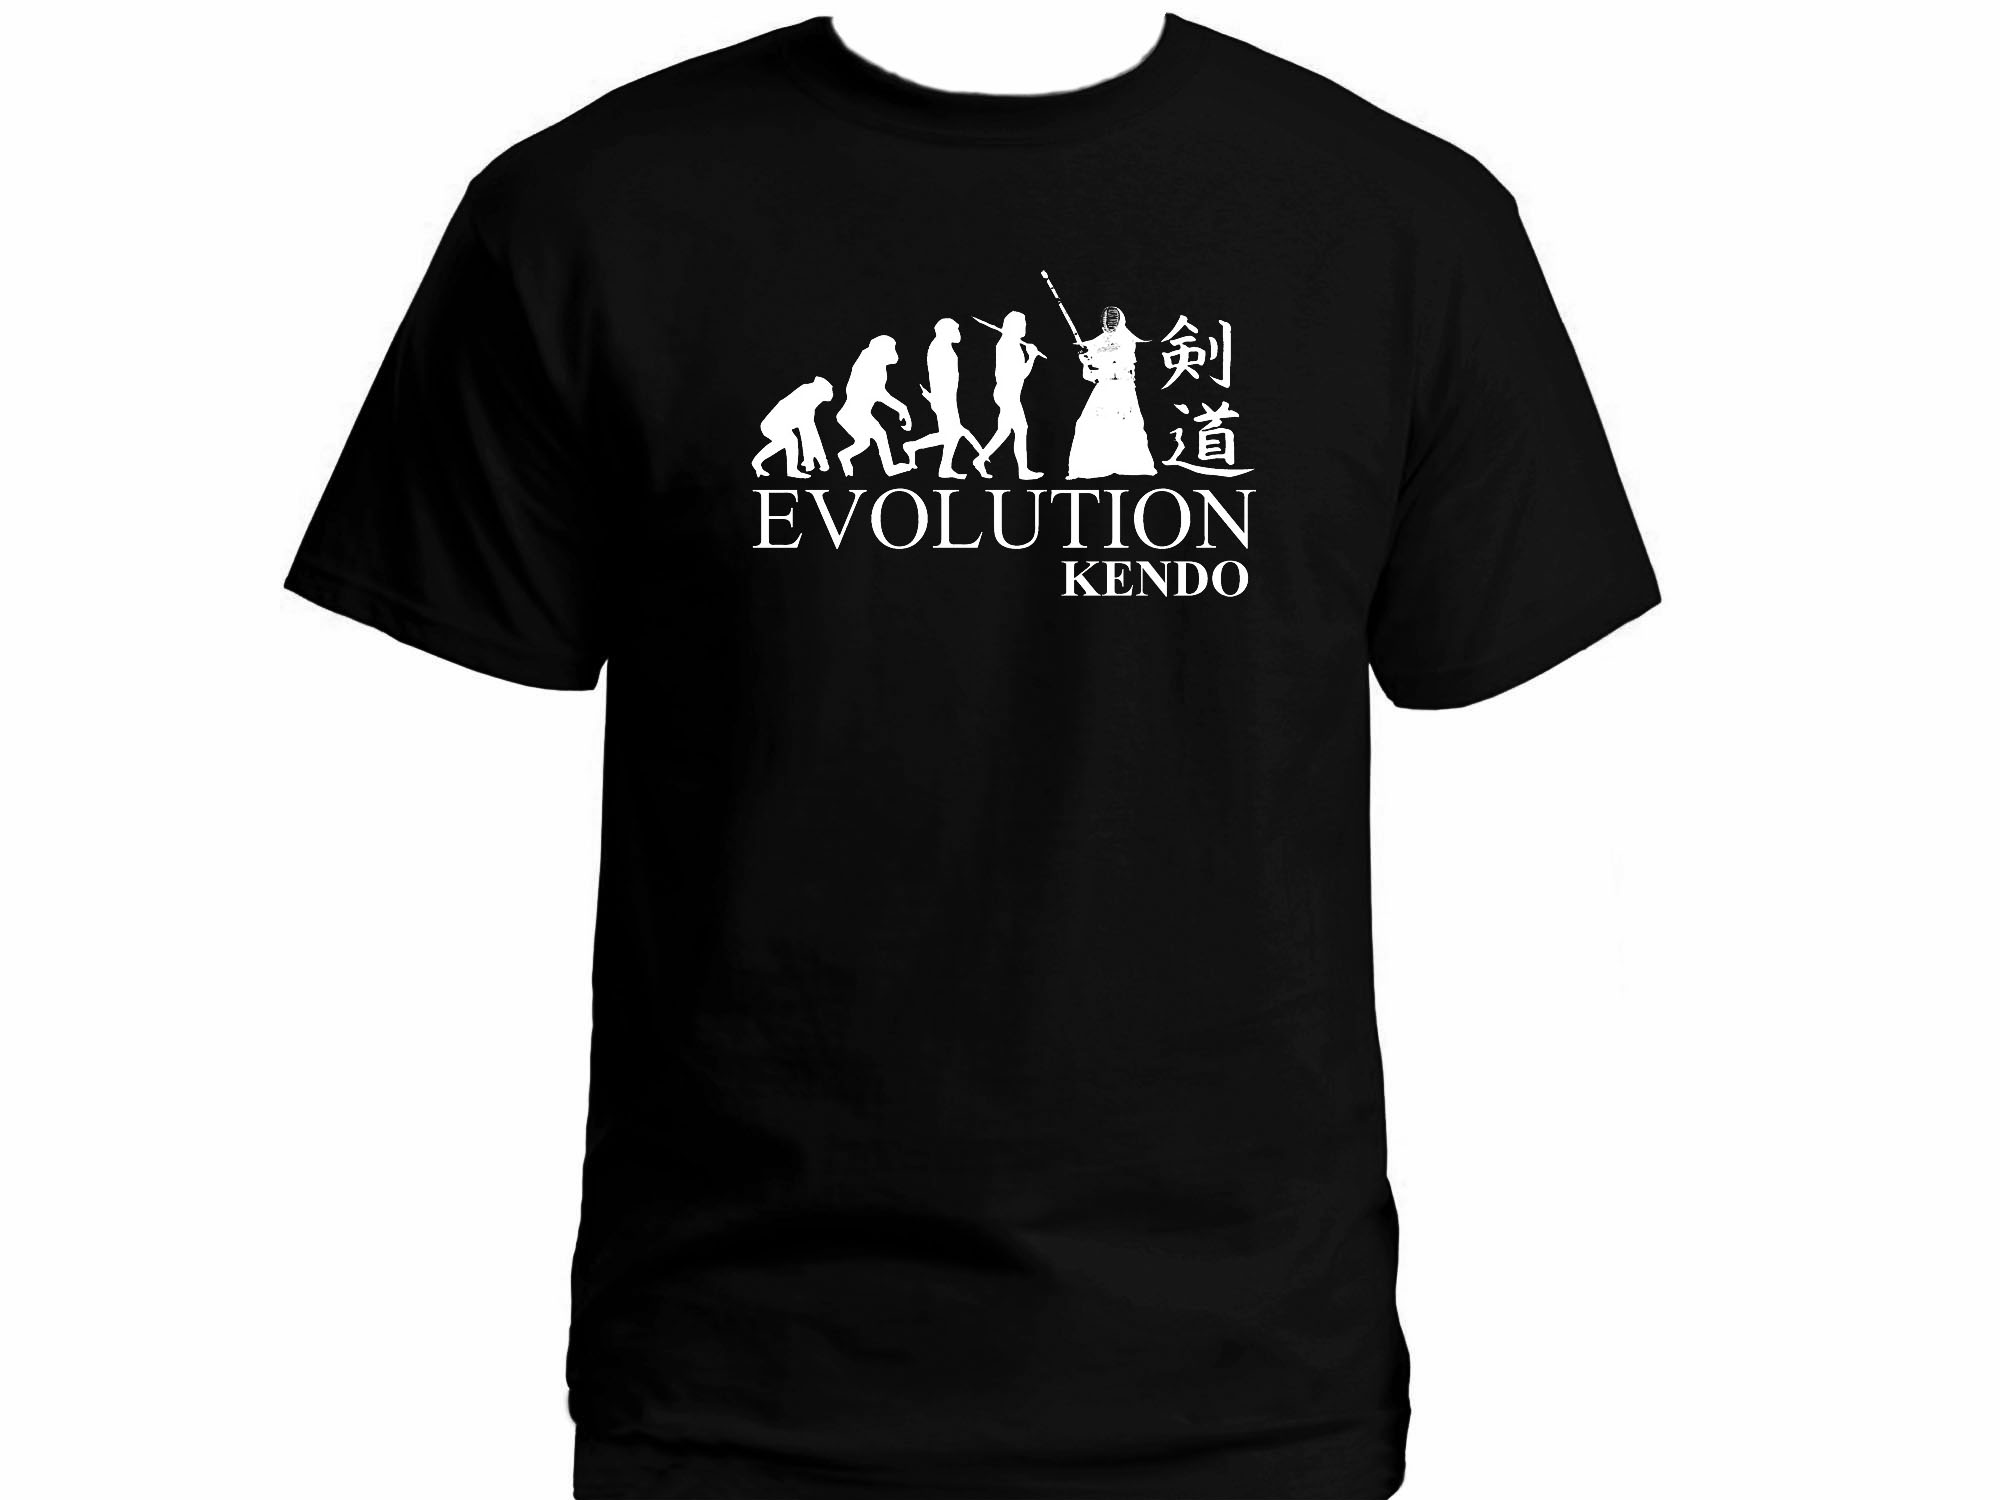 Evolution Kendo Japanese martial arts MMA t-shirt